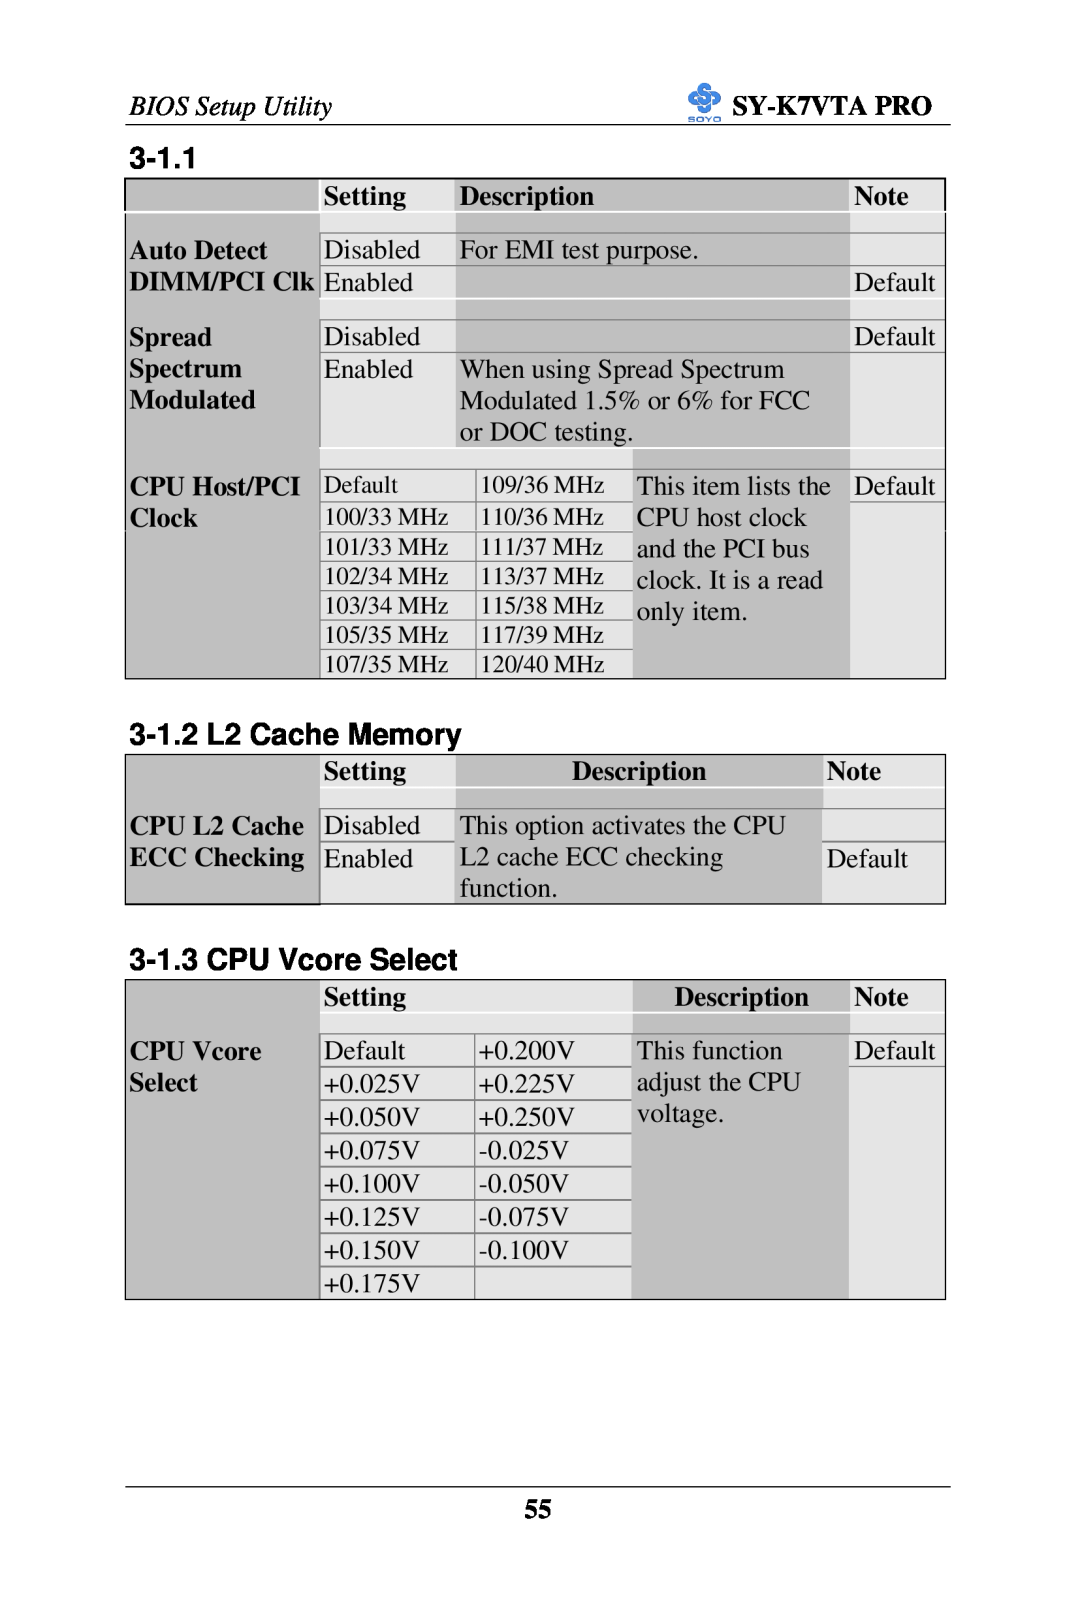 SOYO SY-K7VTA PRO user manual 3-1.1, 3-1.2 L2 Cache Memory, CPU Vcore Select 